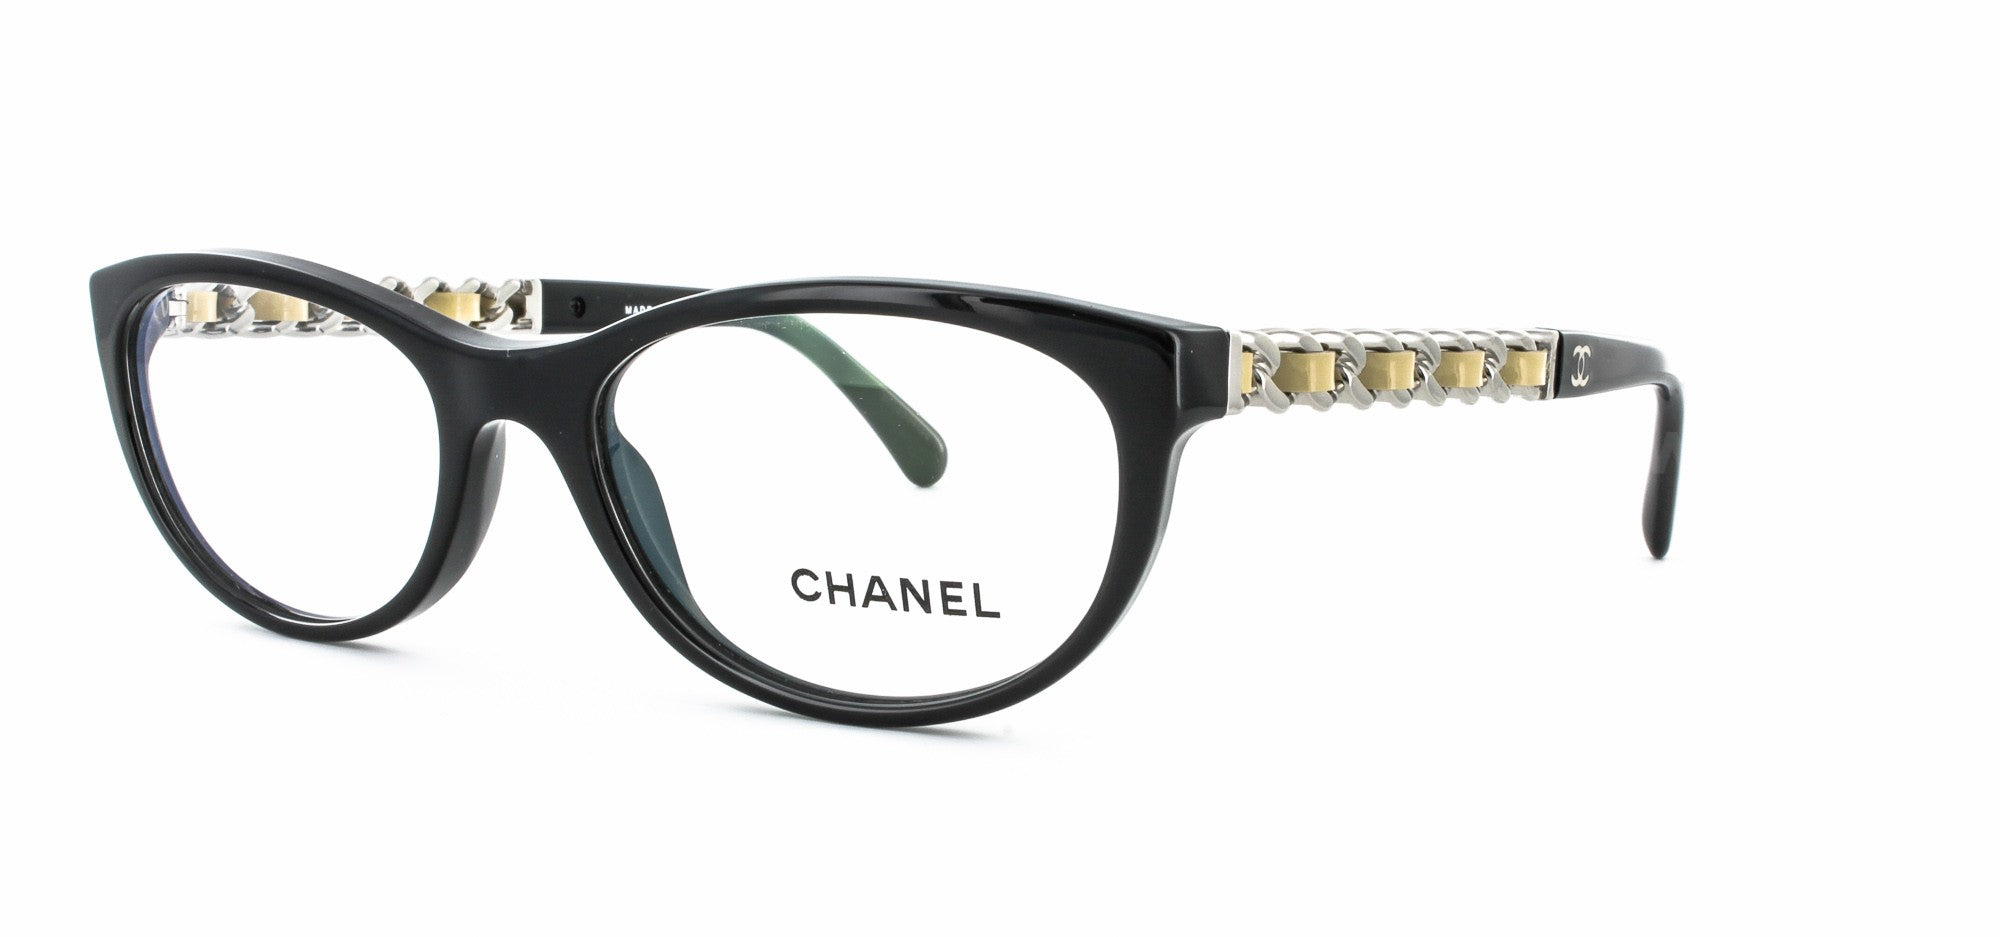 Sunglasses Square Sunglasses metal calfskin  imitation pearls  Fashion   CHANEL